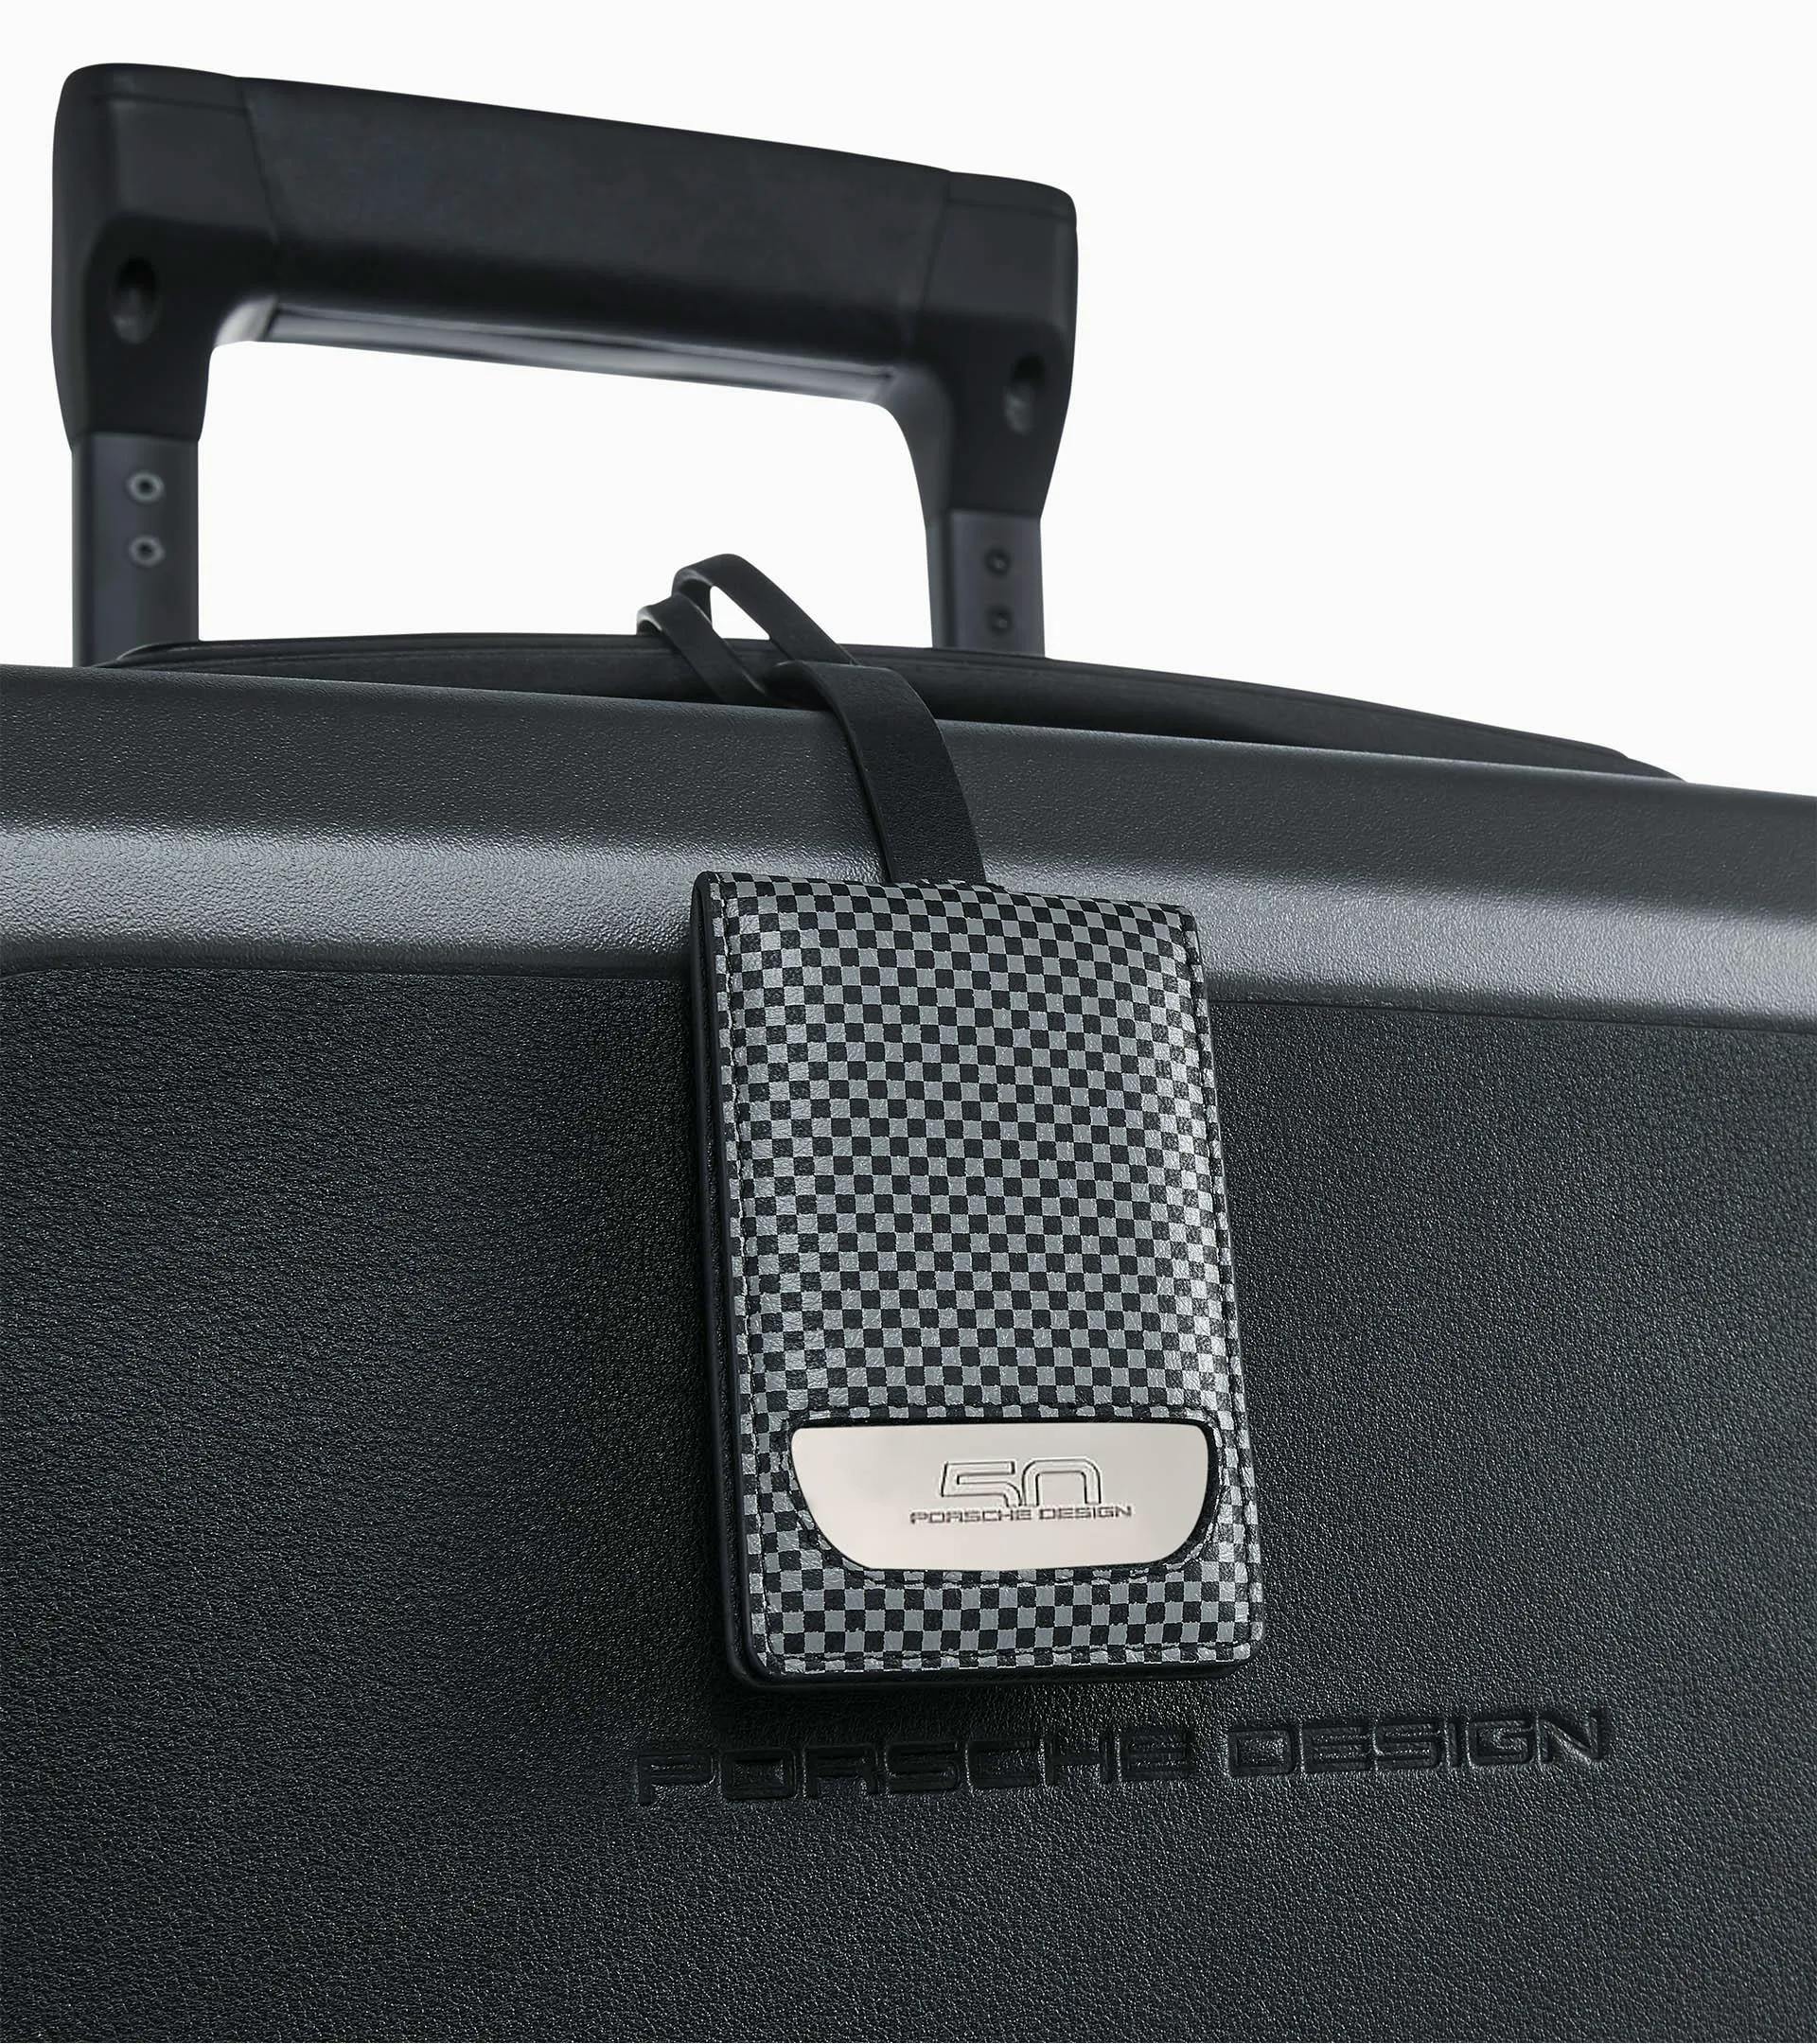 Samsonite - Cinghia per bagagli in nylon 50 mm